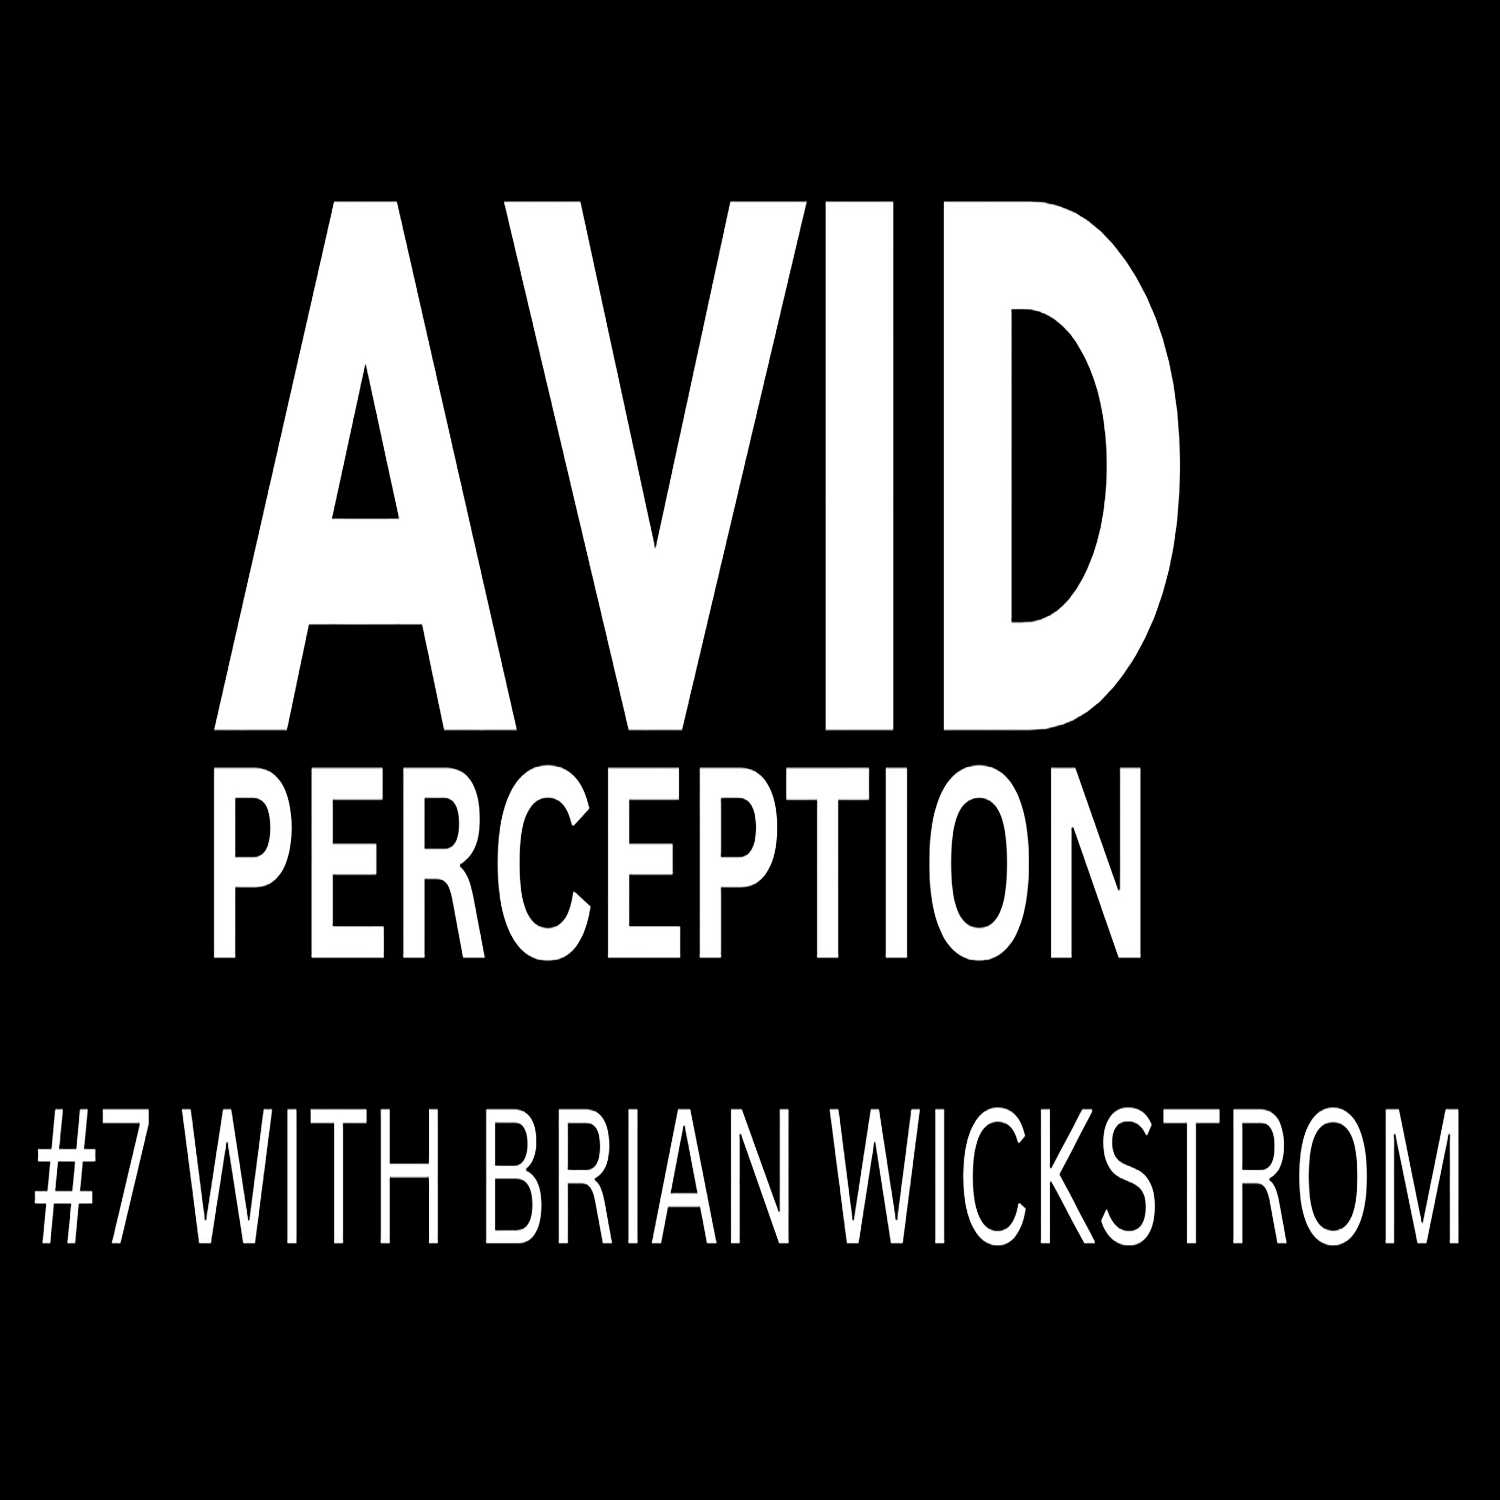 #7 - AVID PERCEPTION WITH BRIAN WICKSTROM